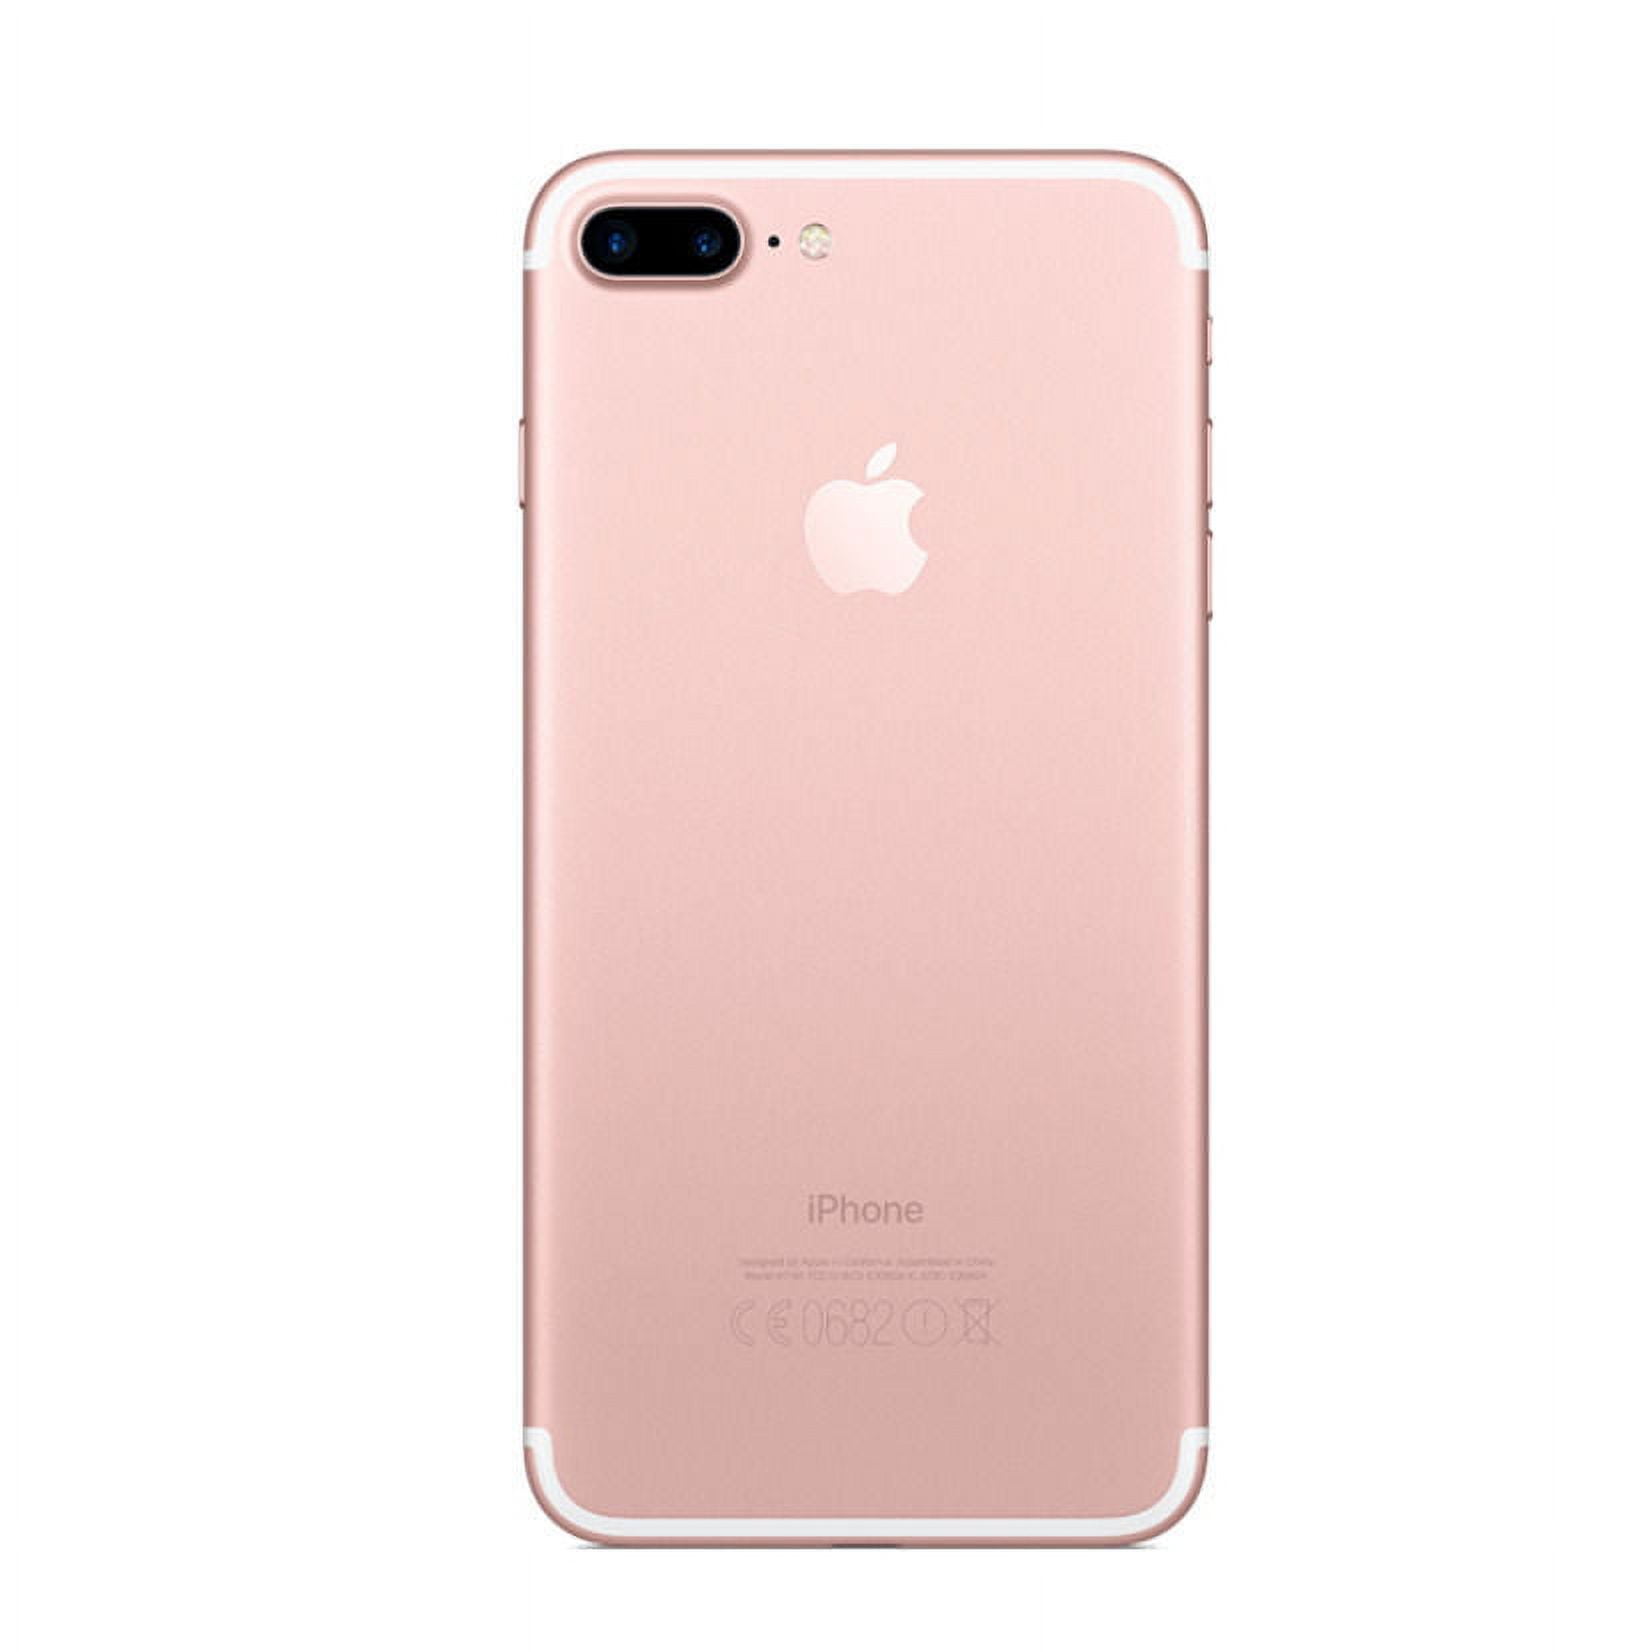 Apple iPhone 7 Plus 128GB Unlocked GSM Smartphone Multi Colors